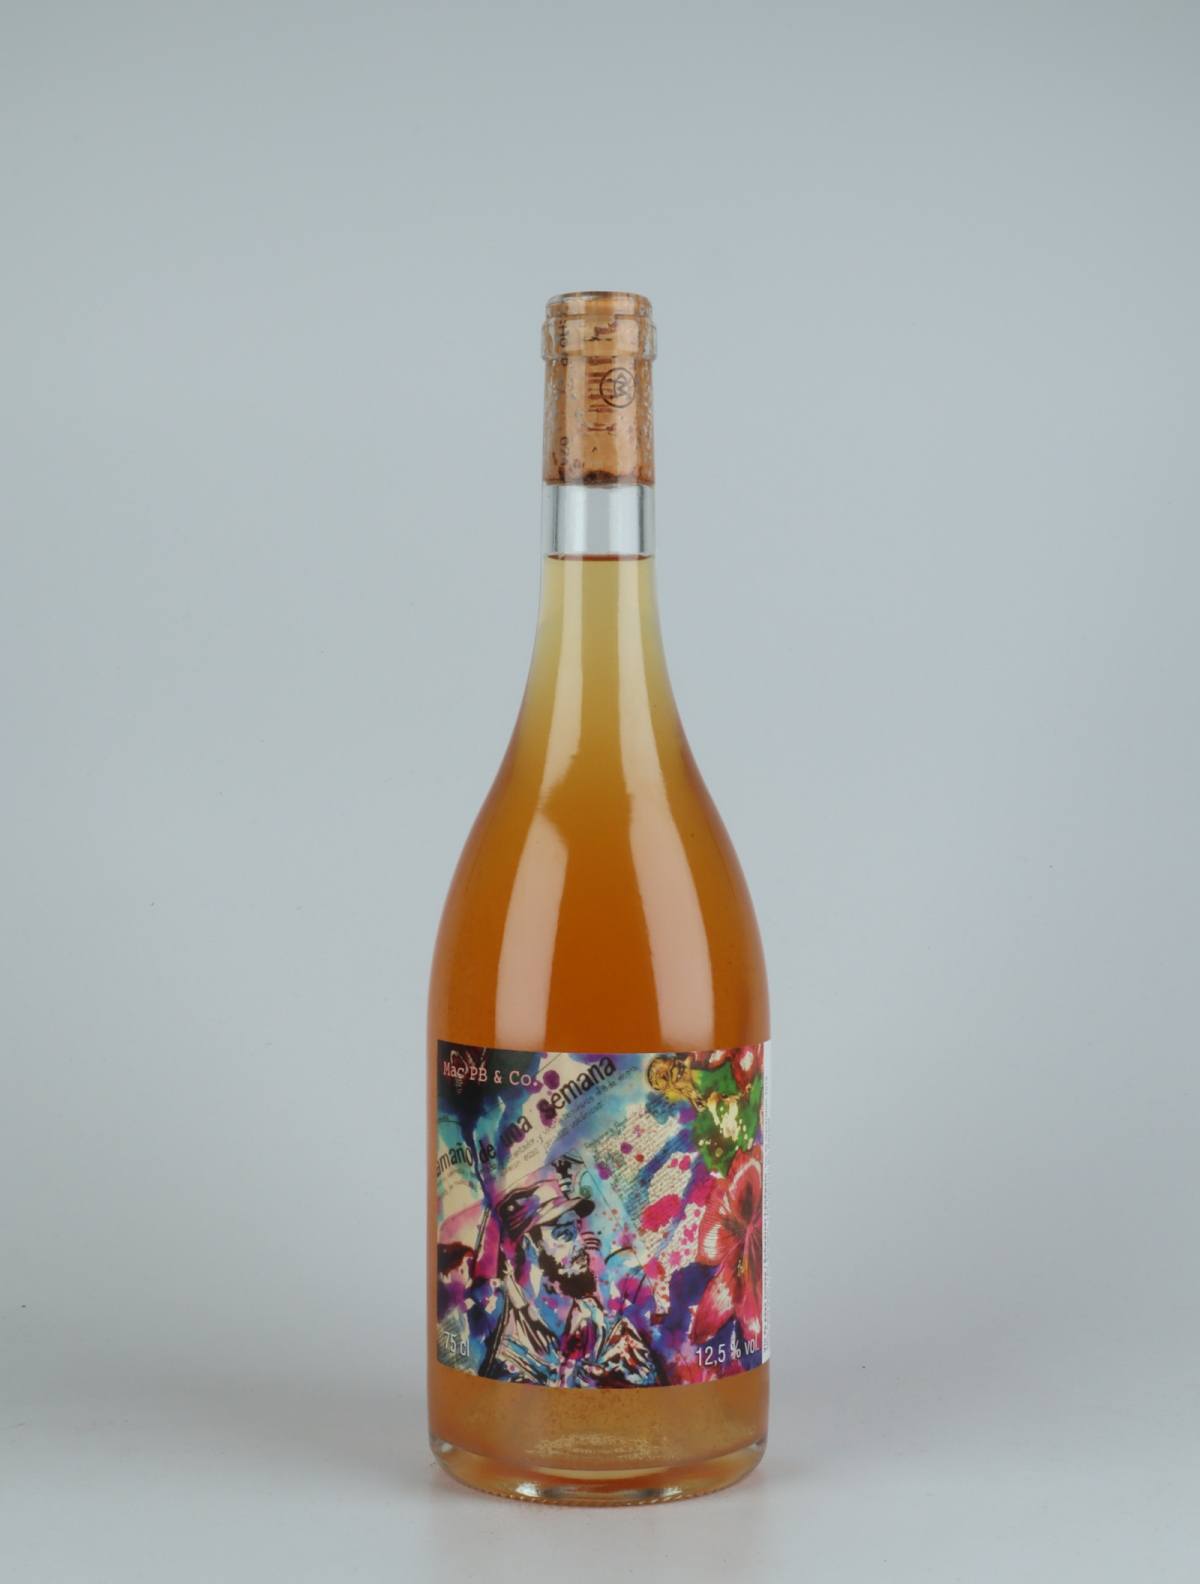 A bottle 2019 Mac PB & Co. Orange wine from Les Vins du Fab, Neuchâtel in Switzerland